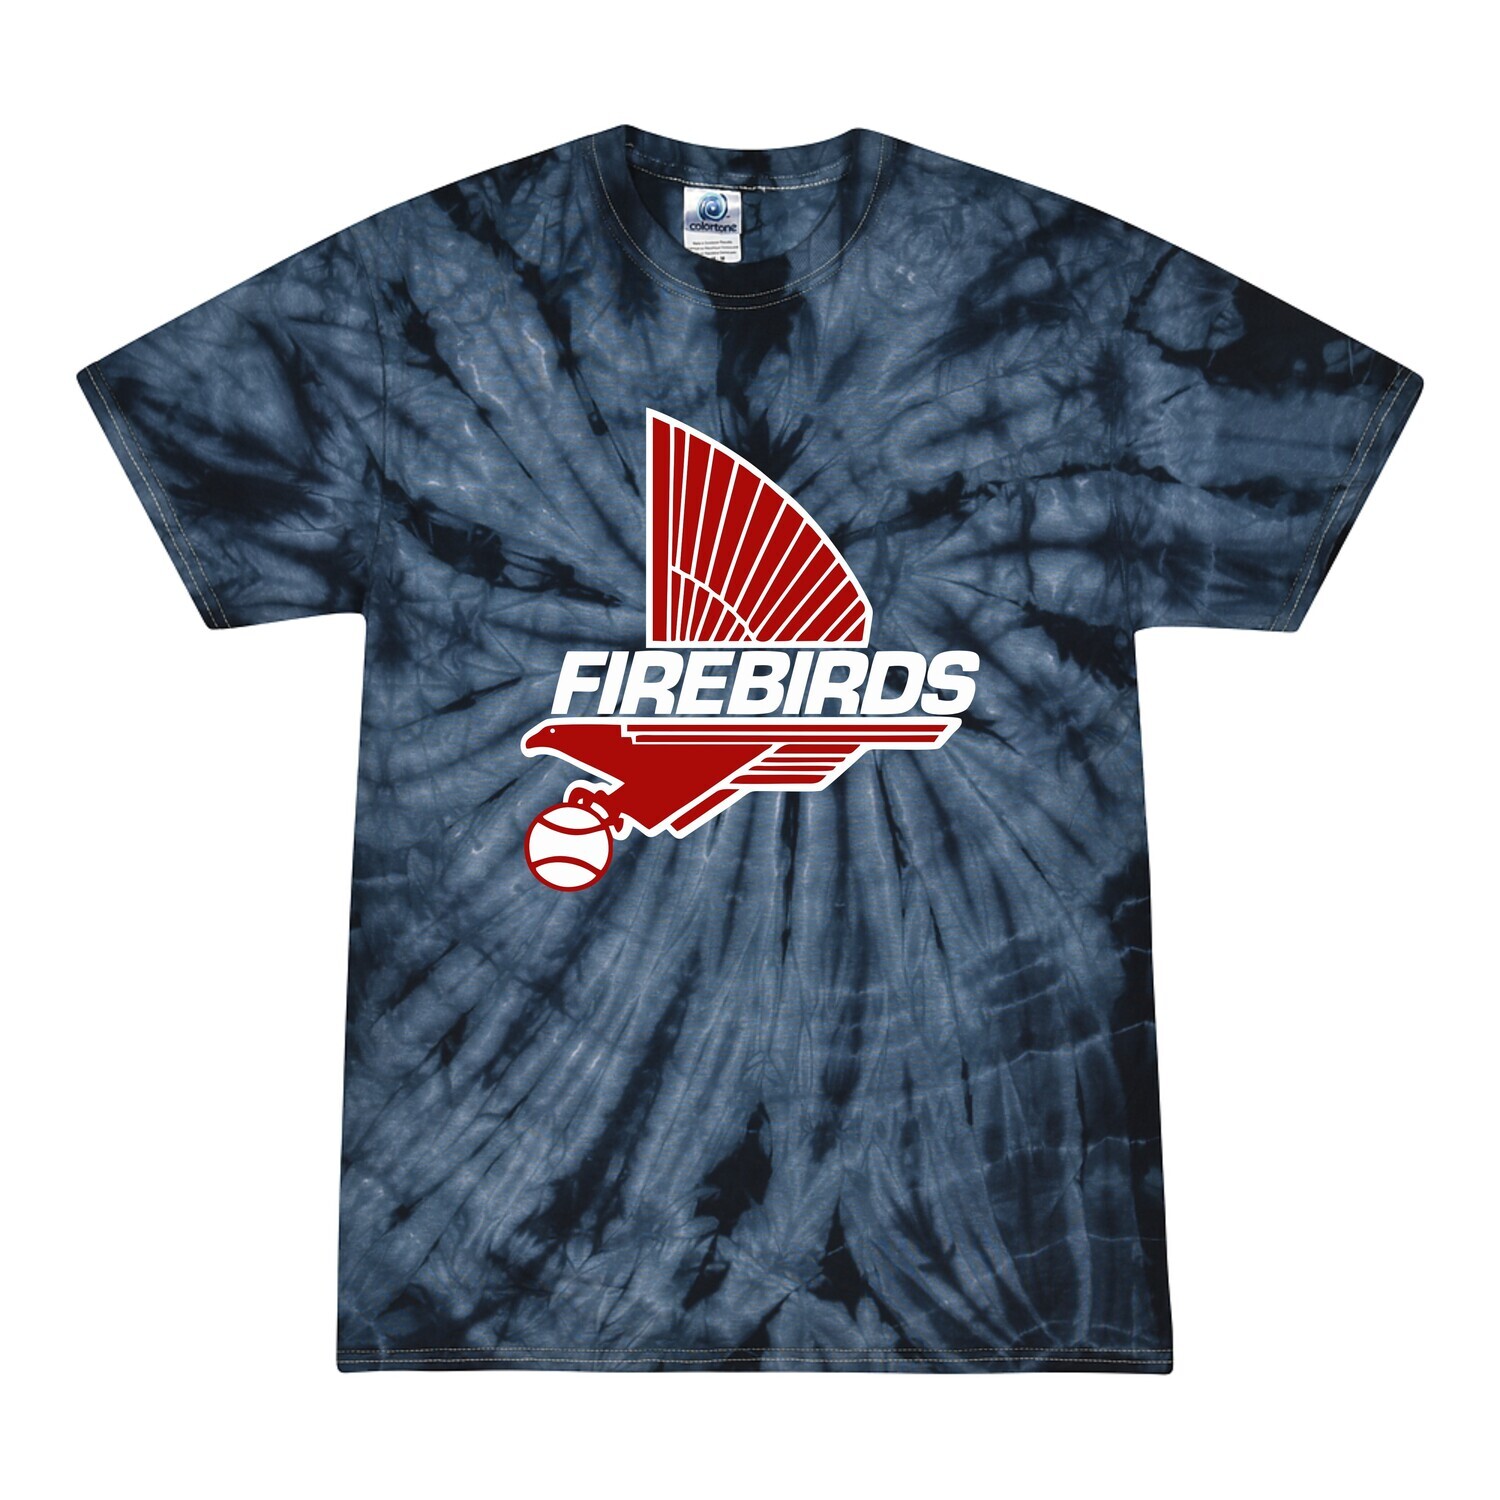 Firebirds tie-dye T-shirt